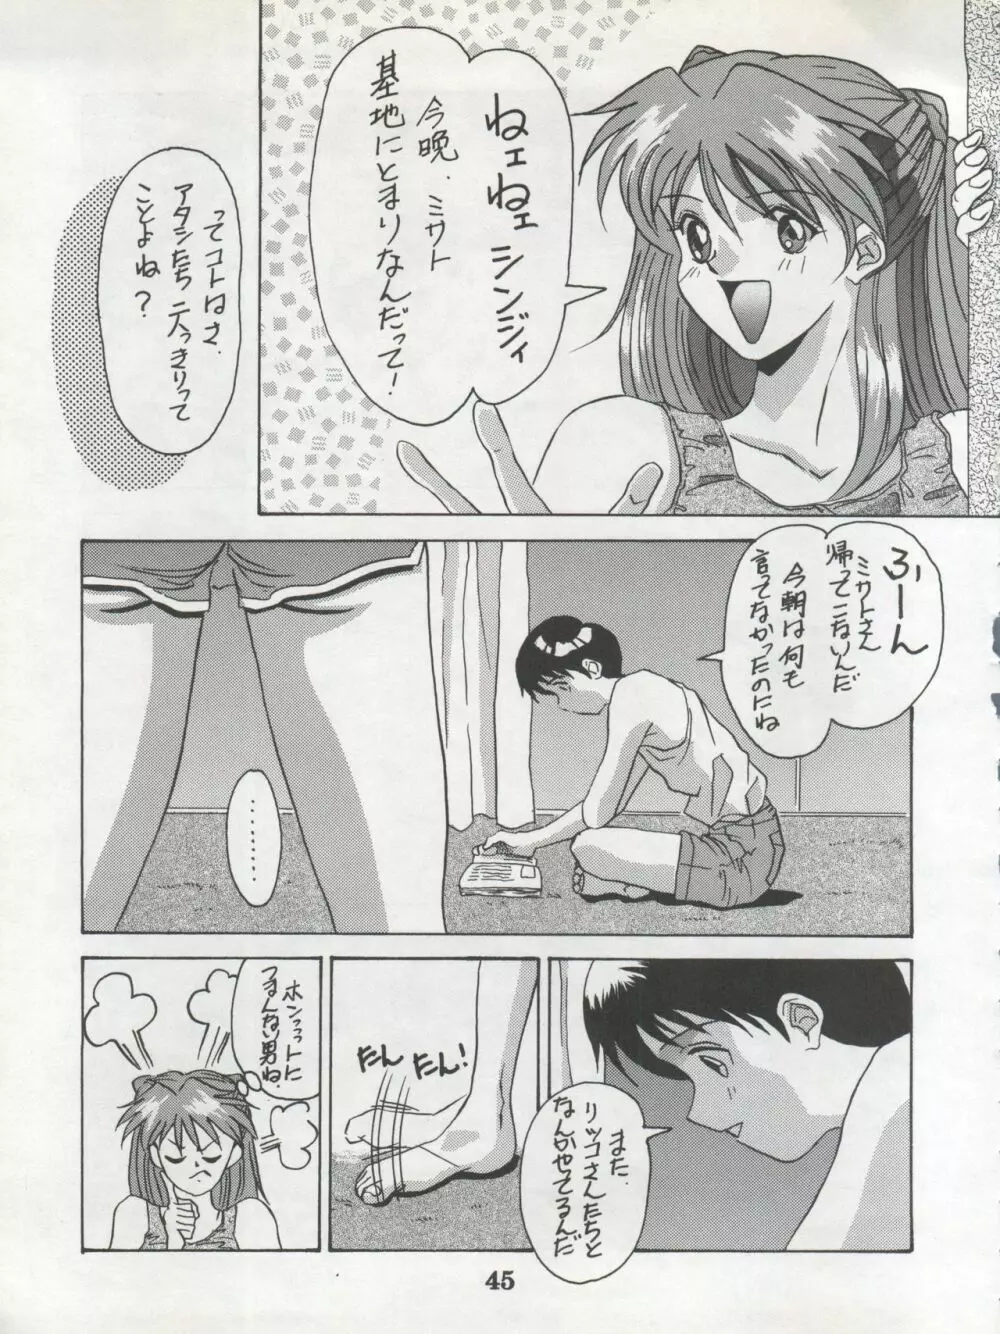 1998 SUMMER 電撃犬王 - page47